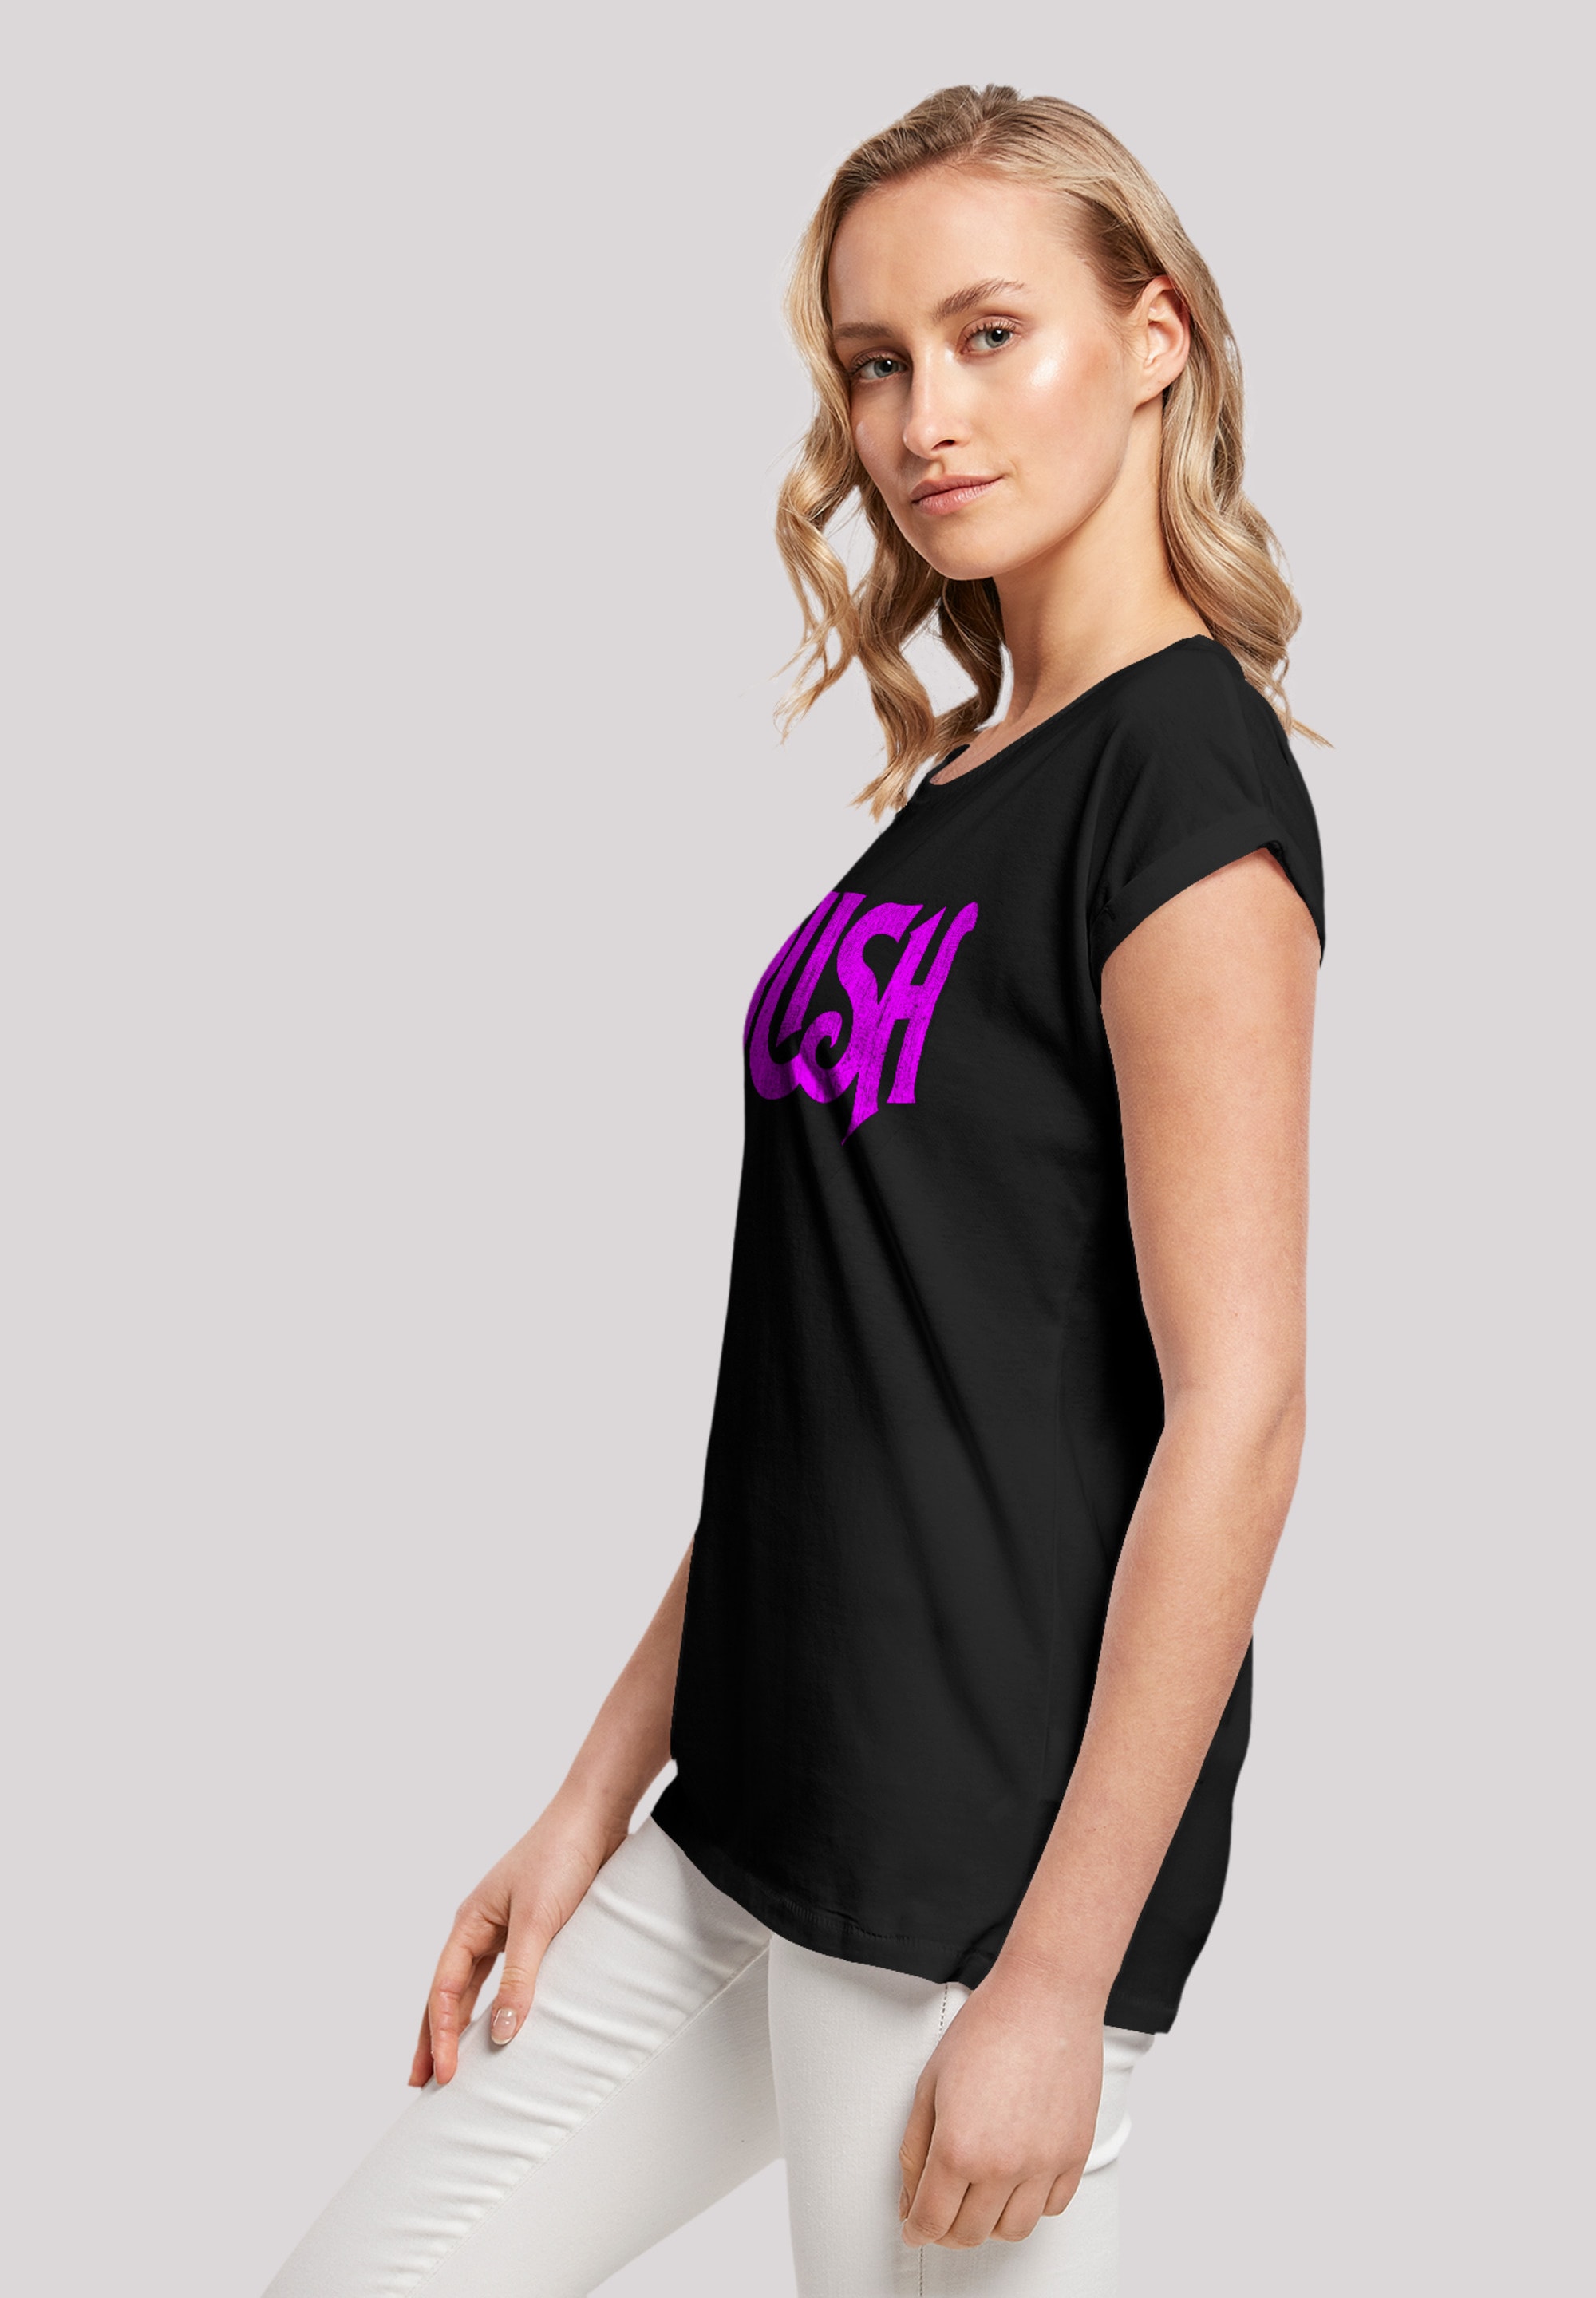 F4NT4STIC T-Shirt »Rush Rock Band Distressed Logo«, Premium Qualität | I'm  walking